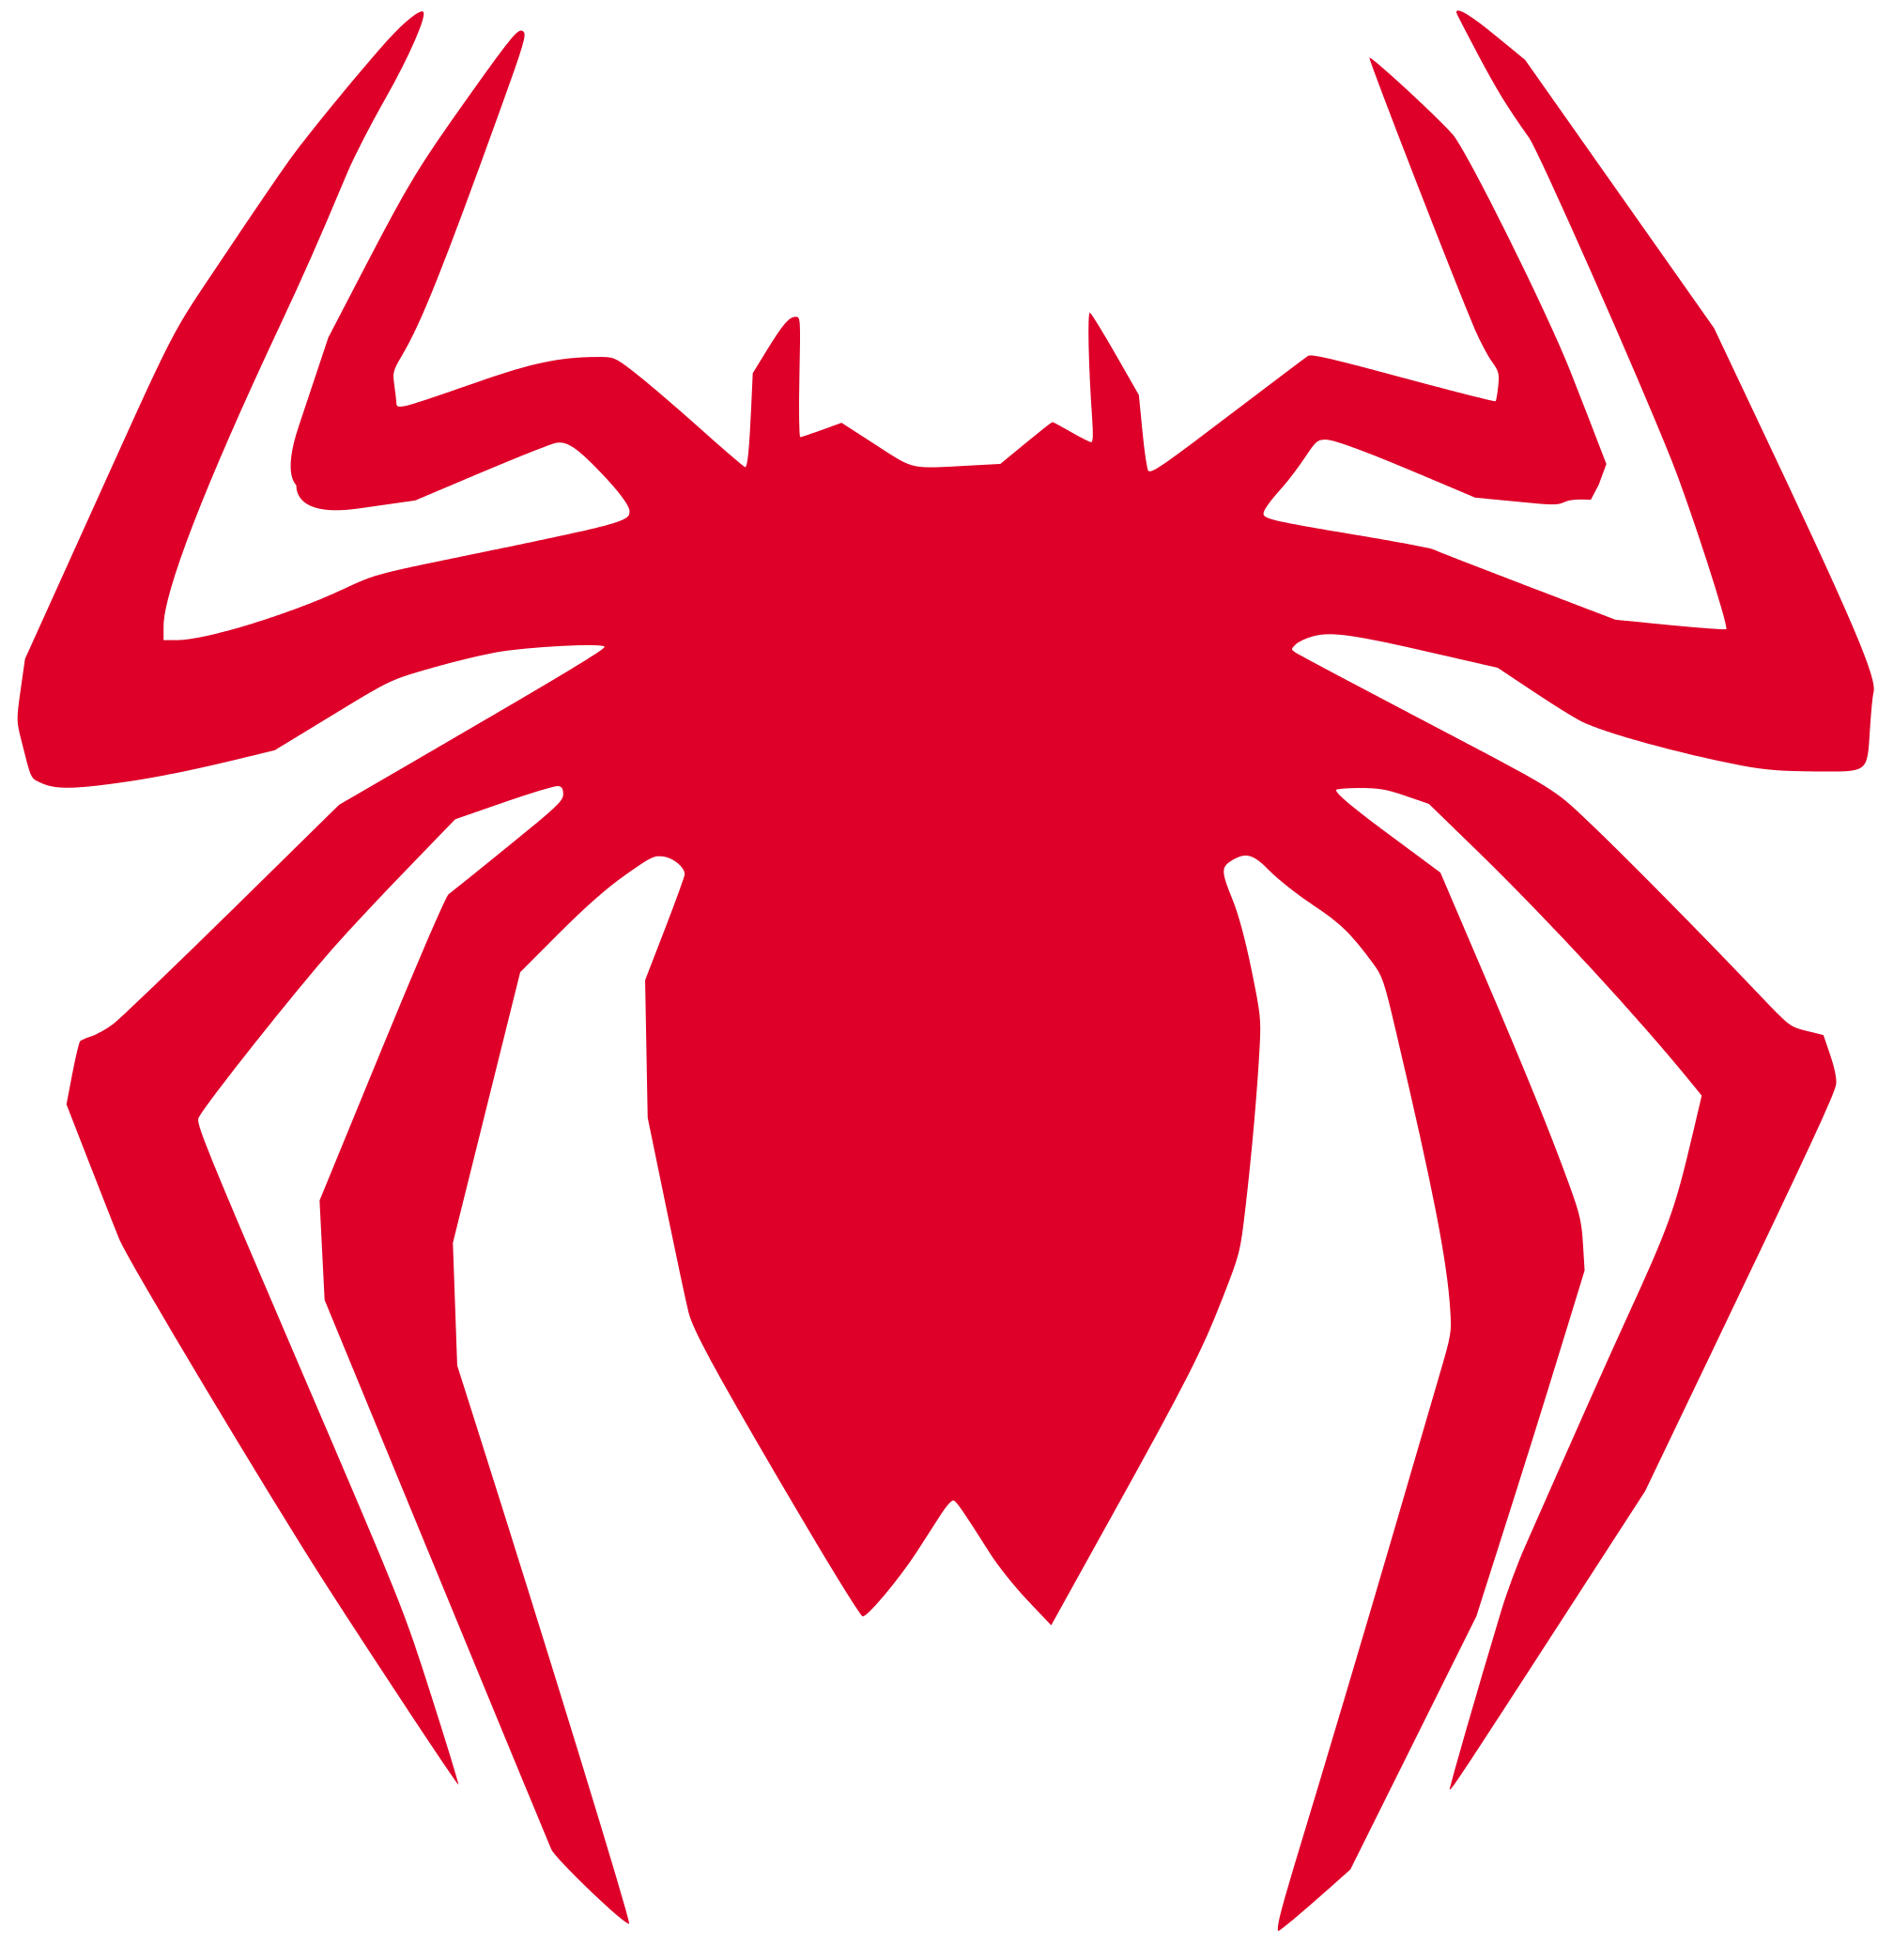 Spiderman Symbol Transparent #1558709 (License: Personal Use) .